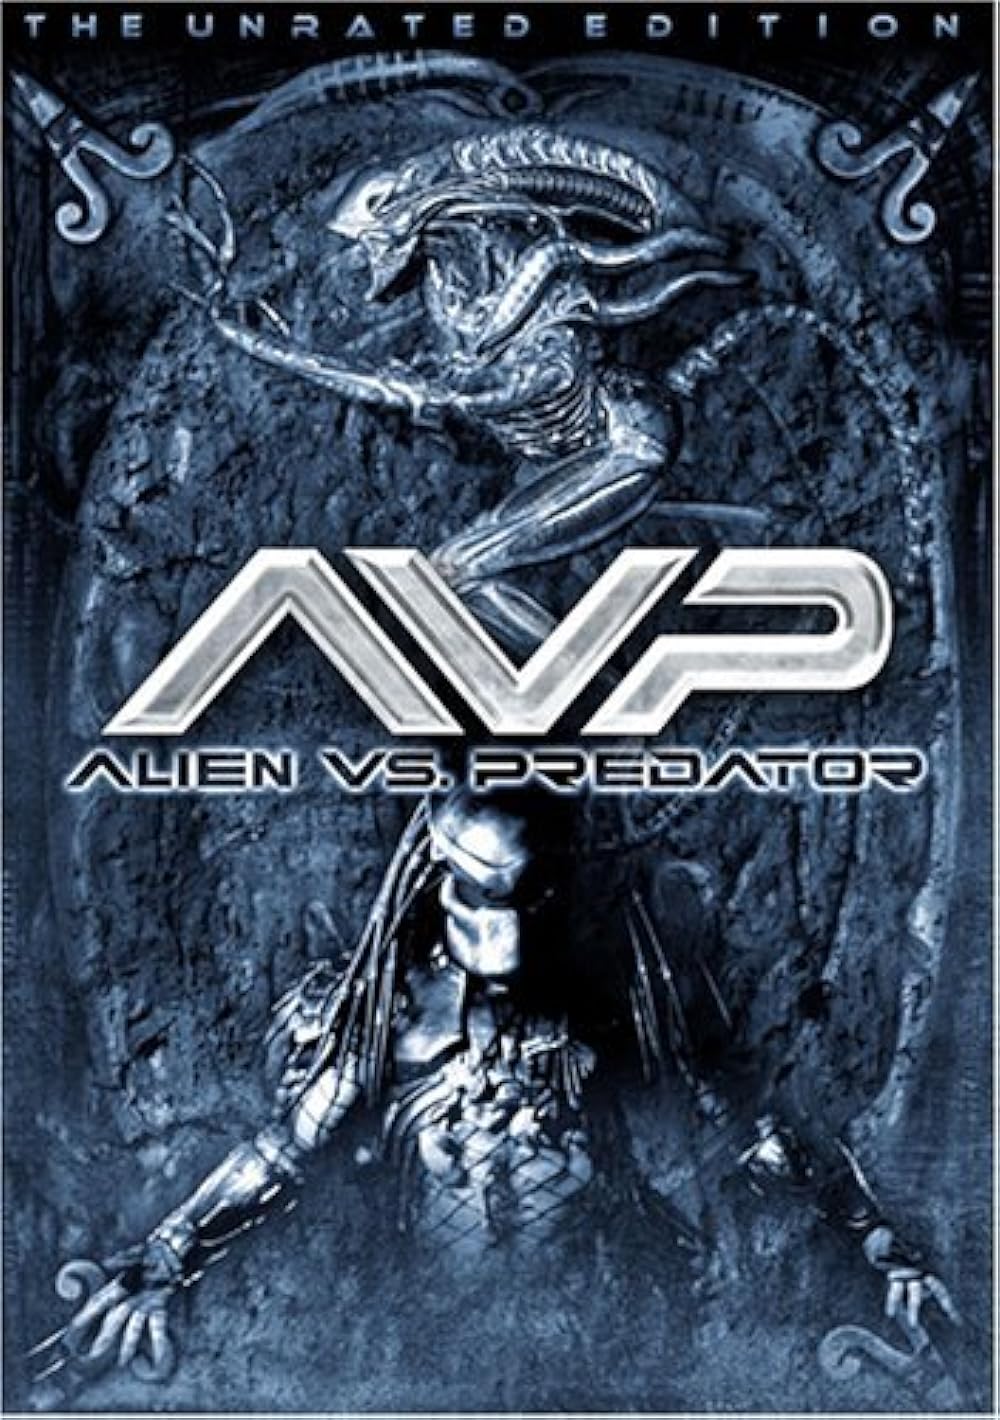 AVP Alien vs. Predator (2004) Unrated Cut 448Kbps 23.976Fps 48Khz 5.1Ch BluRay Turkish Audio TAC